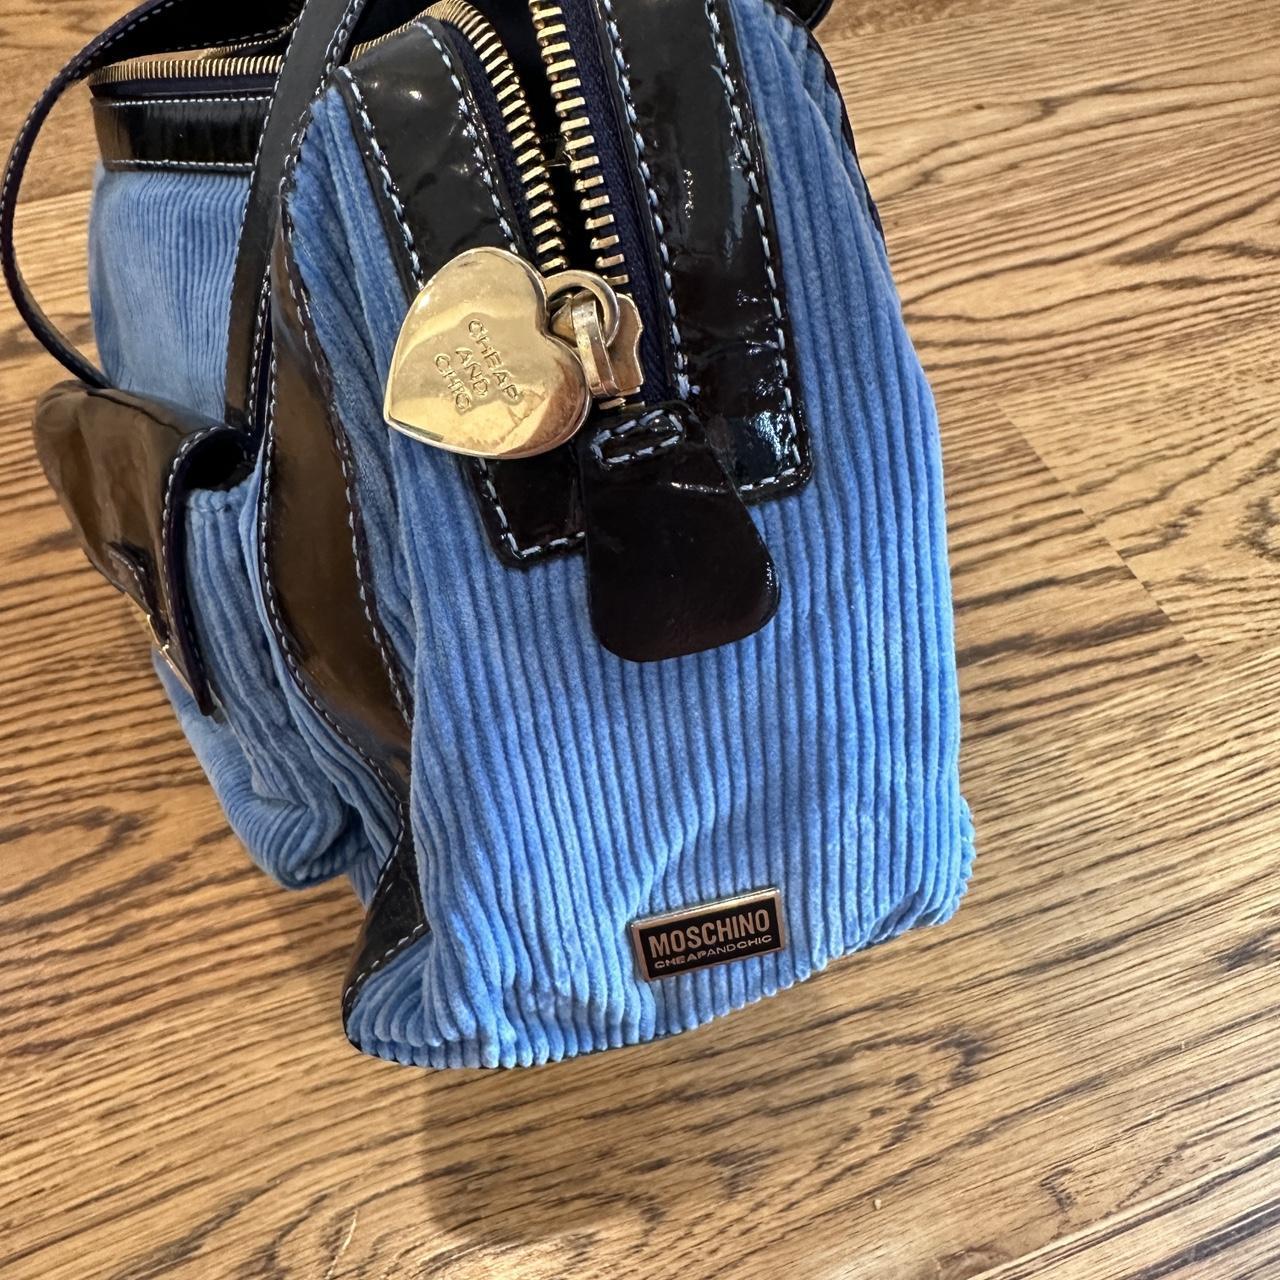 Moschino Cheap & Chic Women's Blue and Black Bag (4)